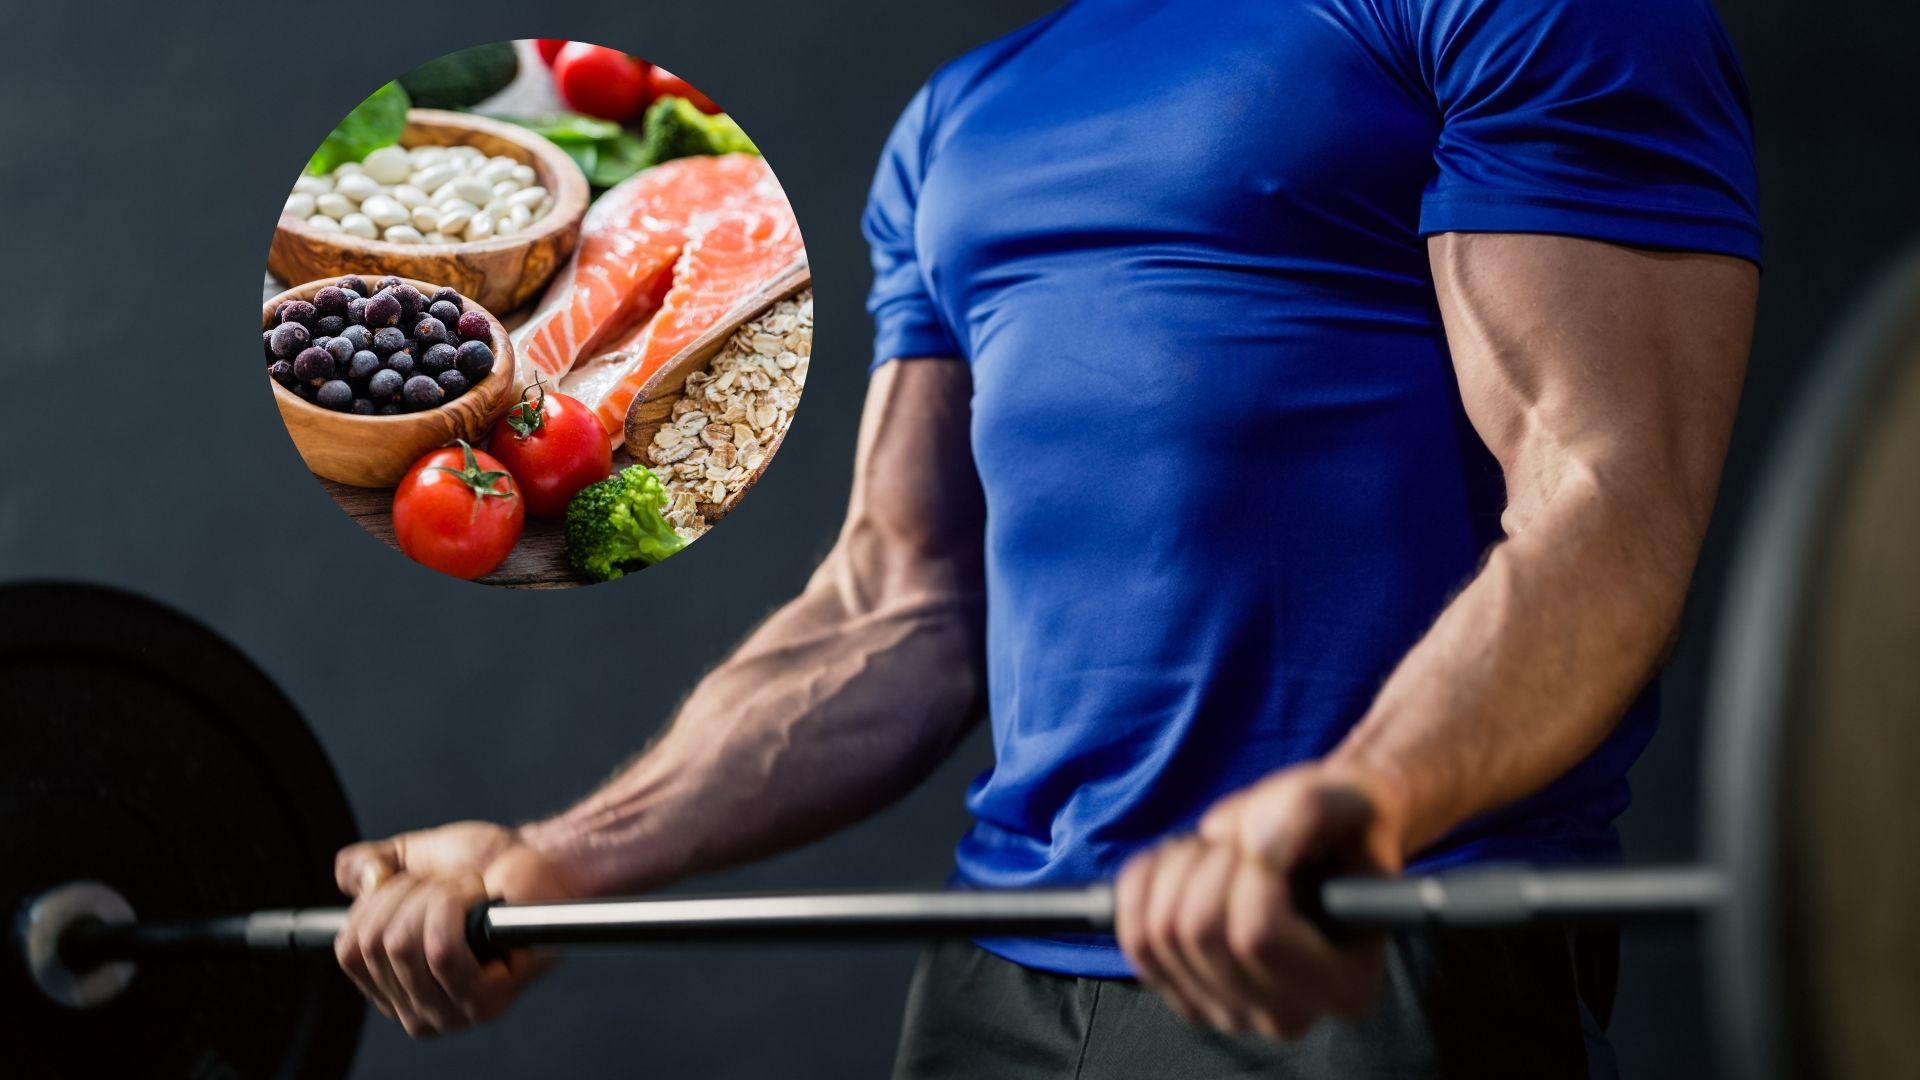 Imagen de músculos y comida por nota sobre alimentos que sacan masa muscular 